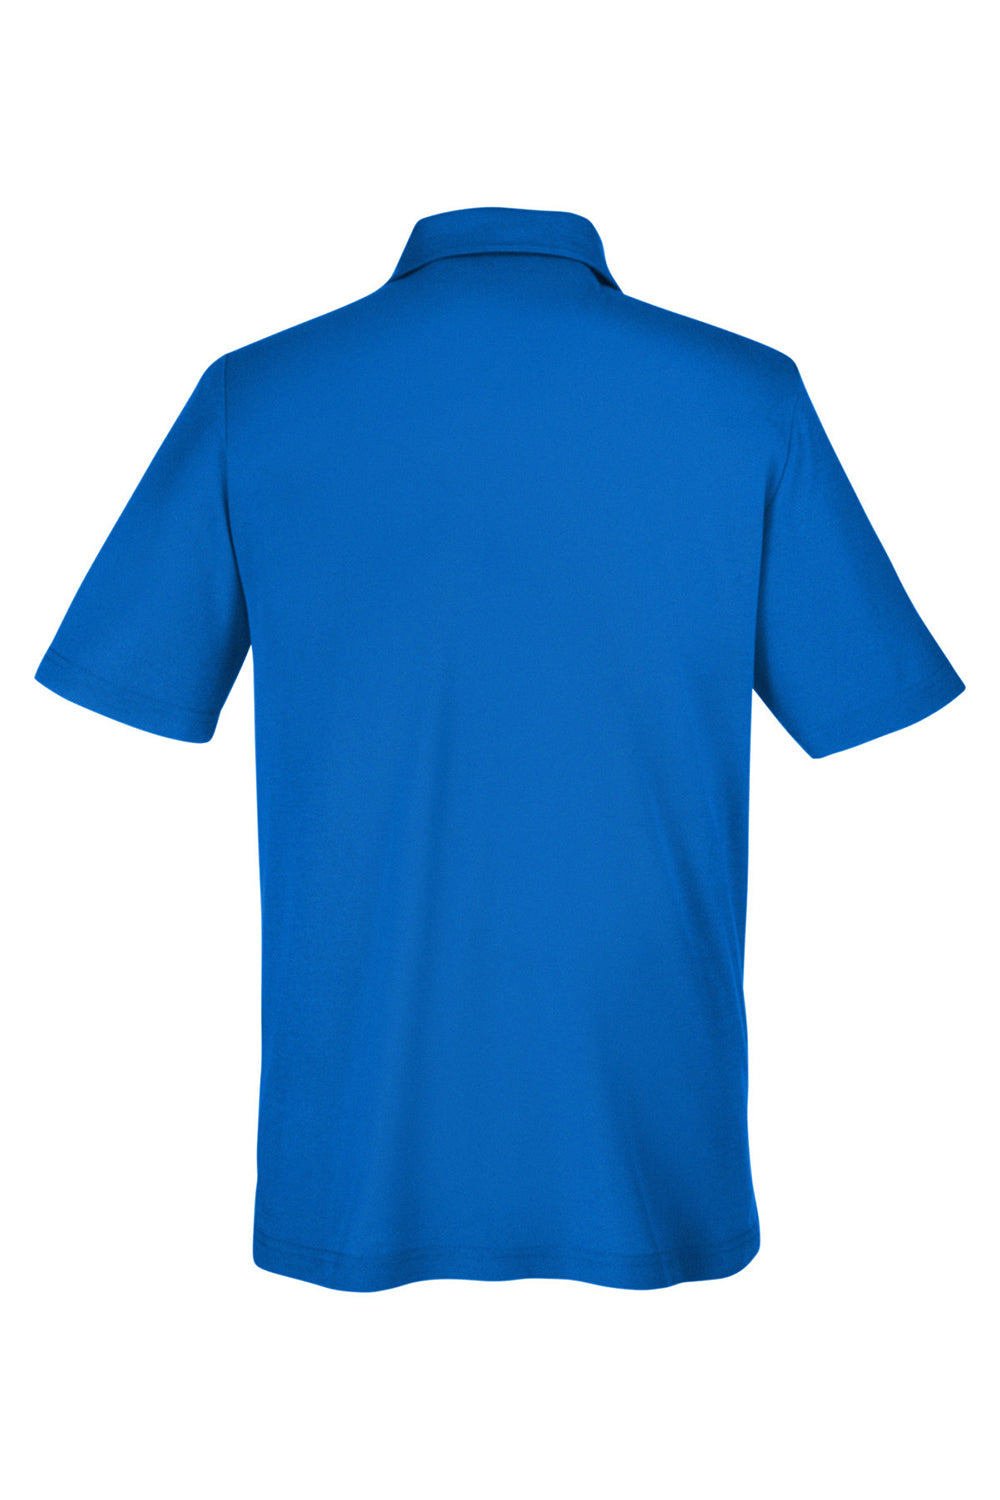 Core 365 CE112 Mens Fusion ChromaSoft Performance Moisture Wicking Short Sleeve Polo Shirt True Royal Blue Flat Back